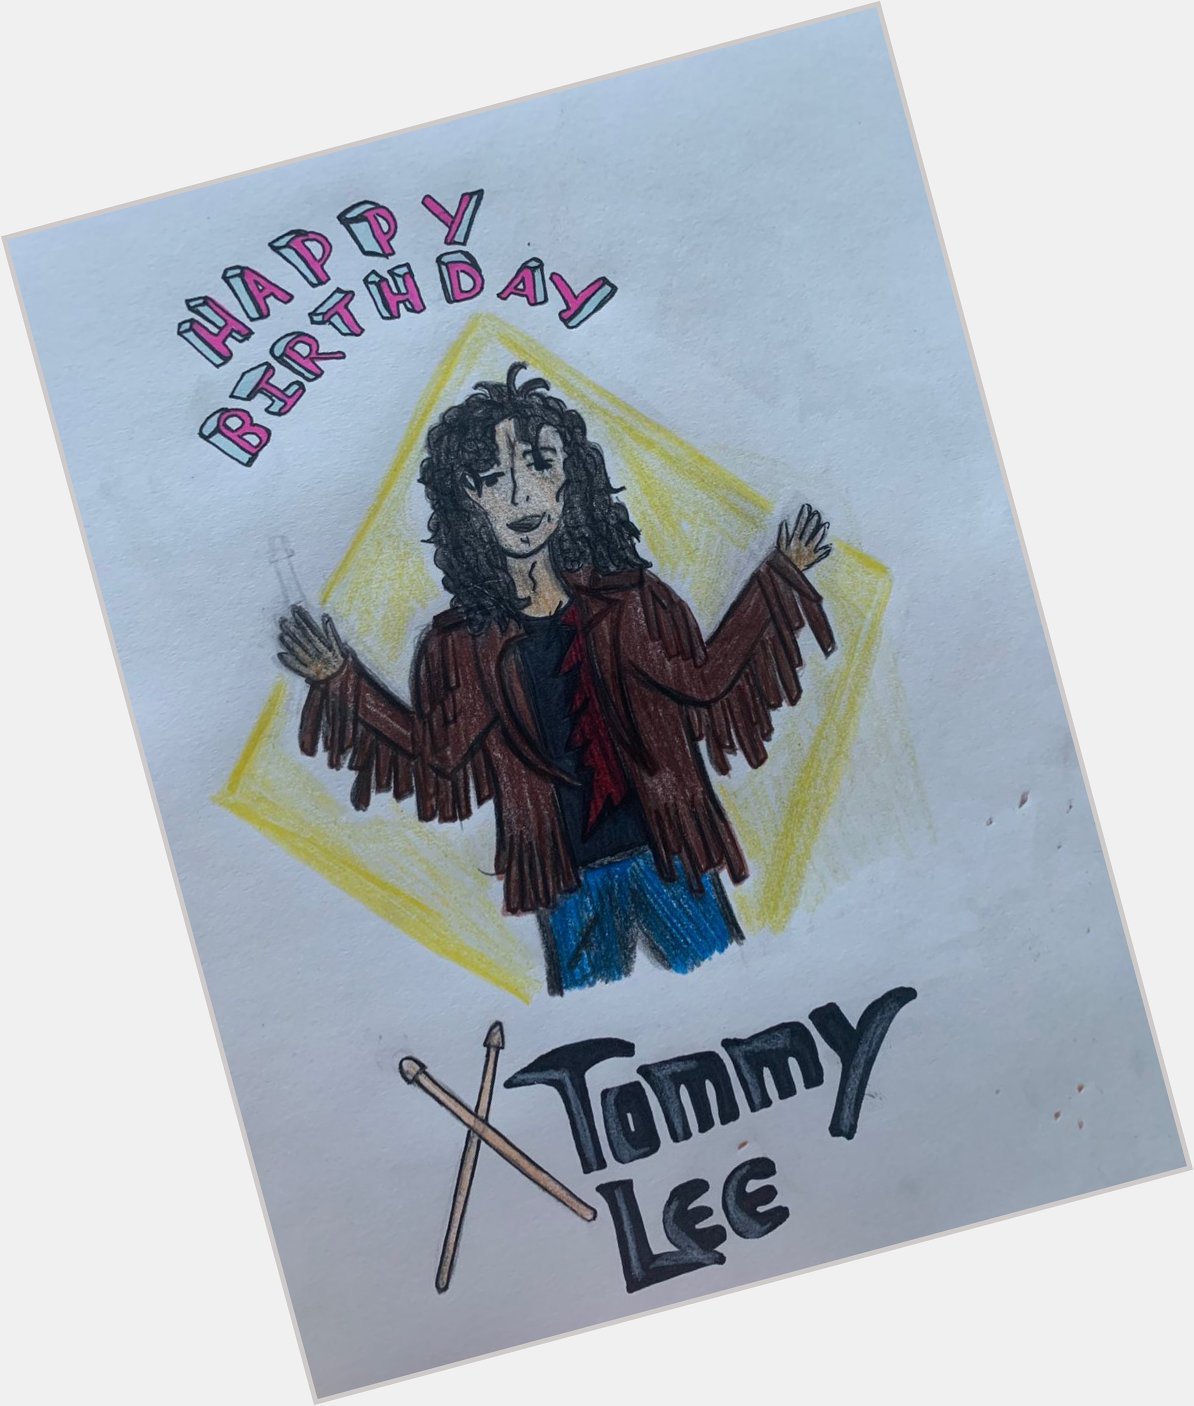     Happy birthday Tommy Lee! Keep on drumming dude!          